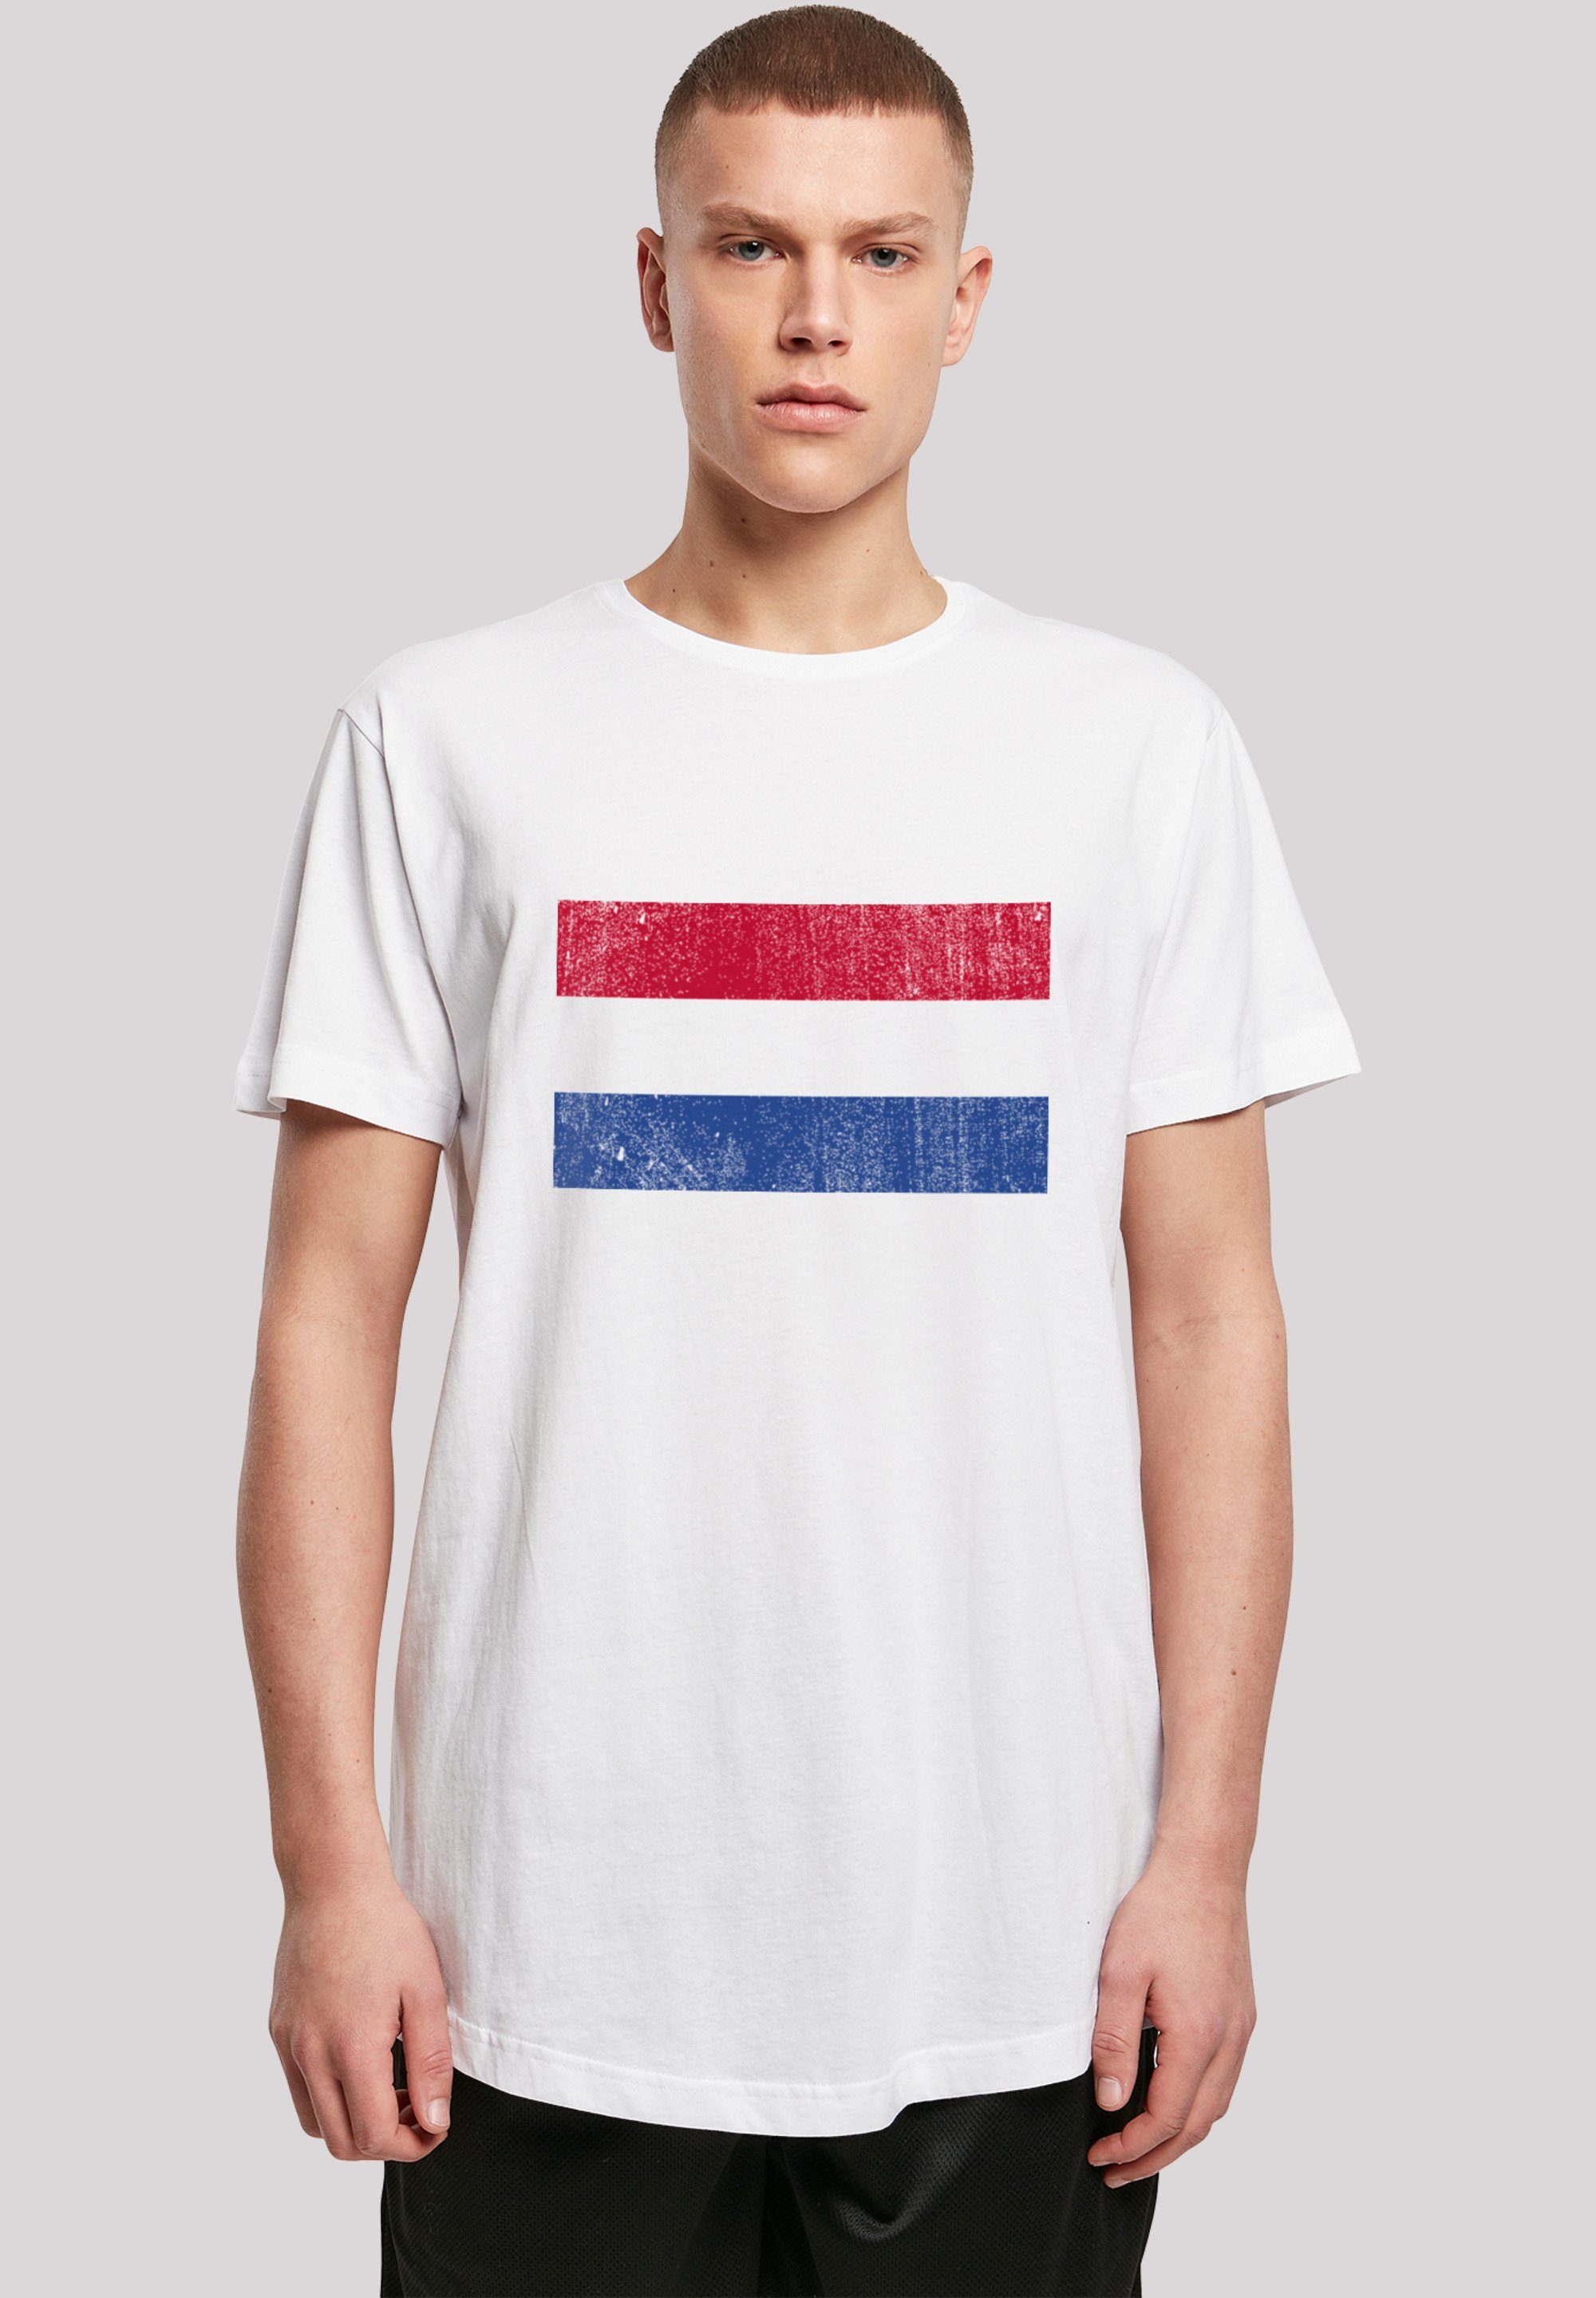 F4NT4STIC T-Shirt distressed Holland Flagge Print weiß Netherlands NIederlande